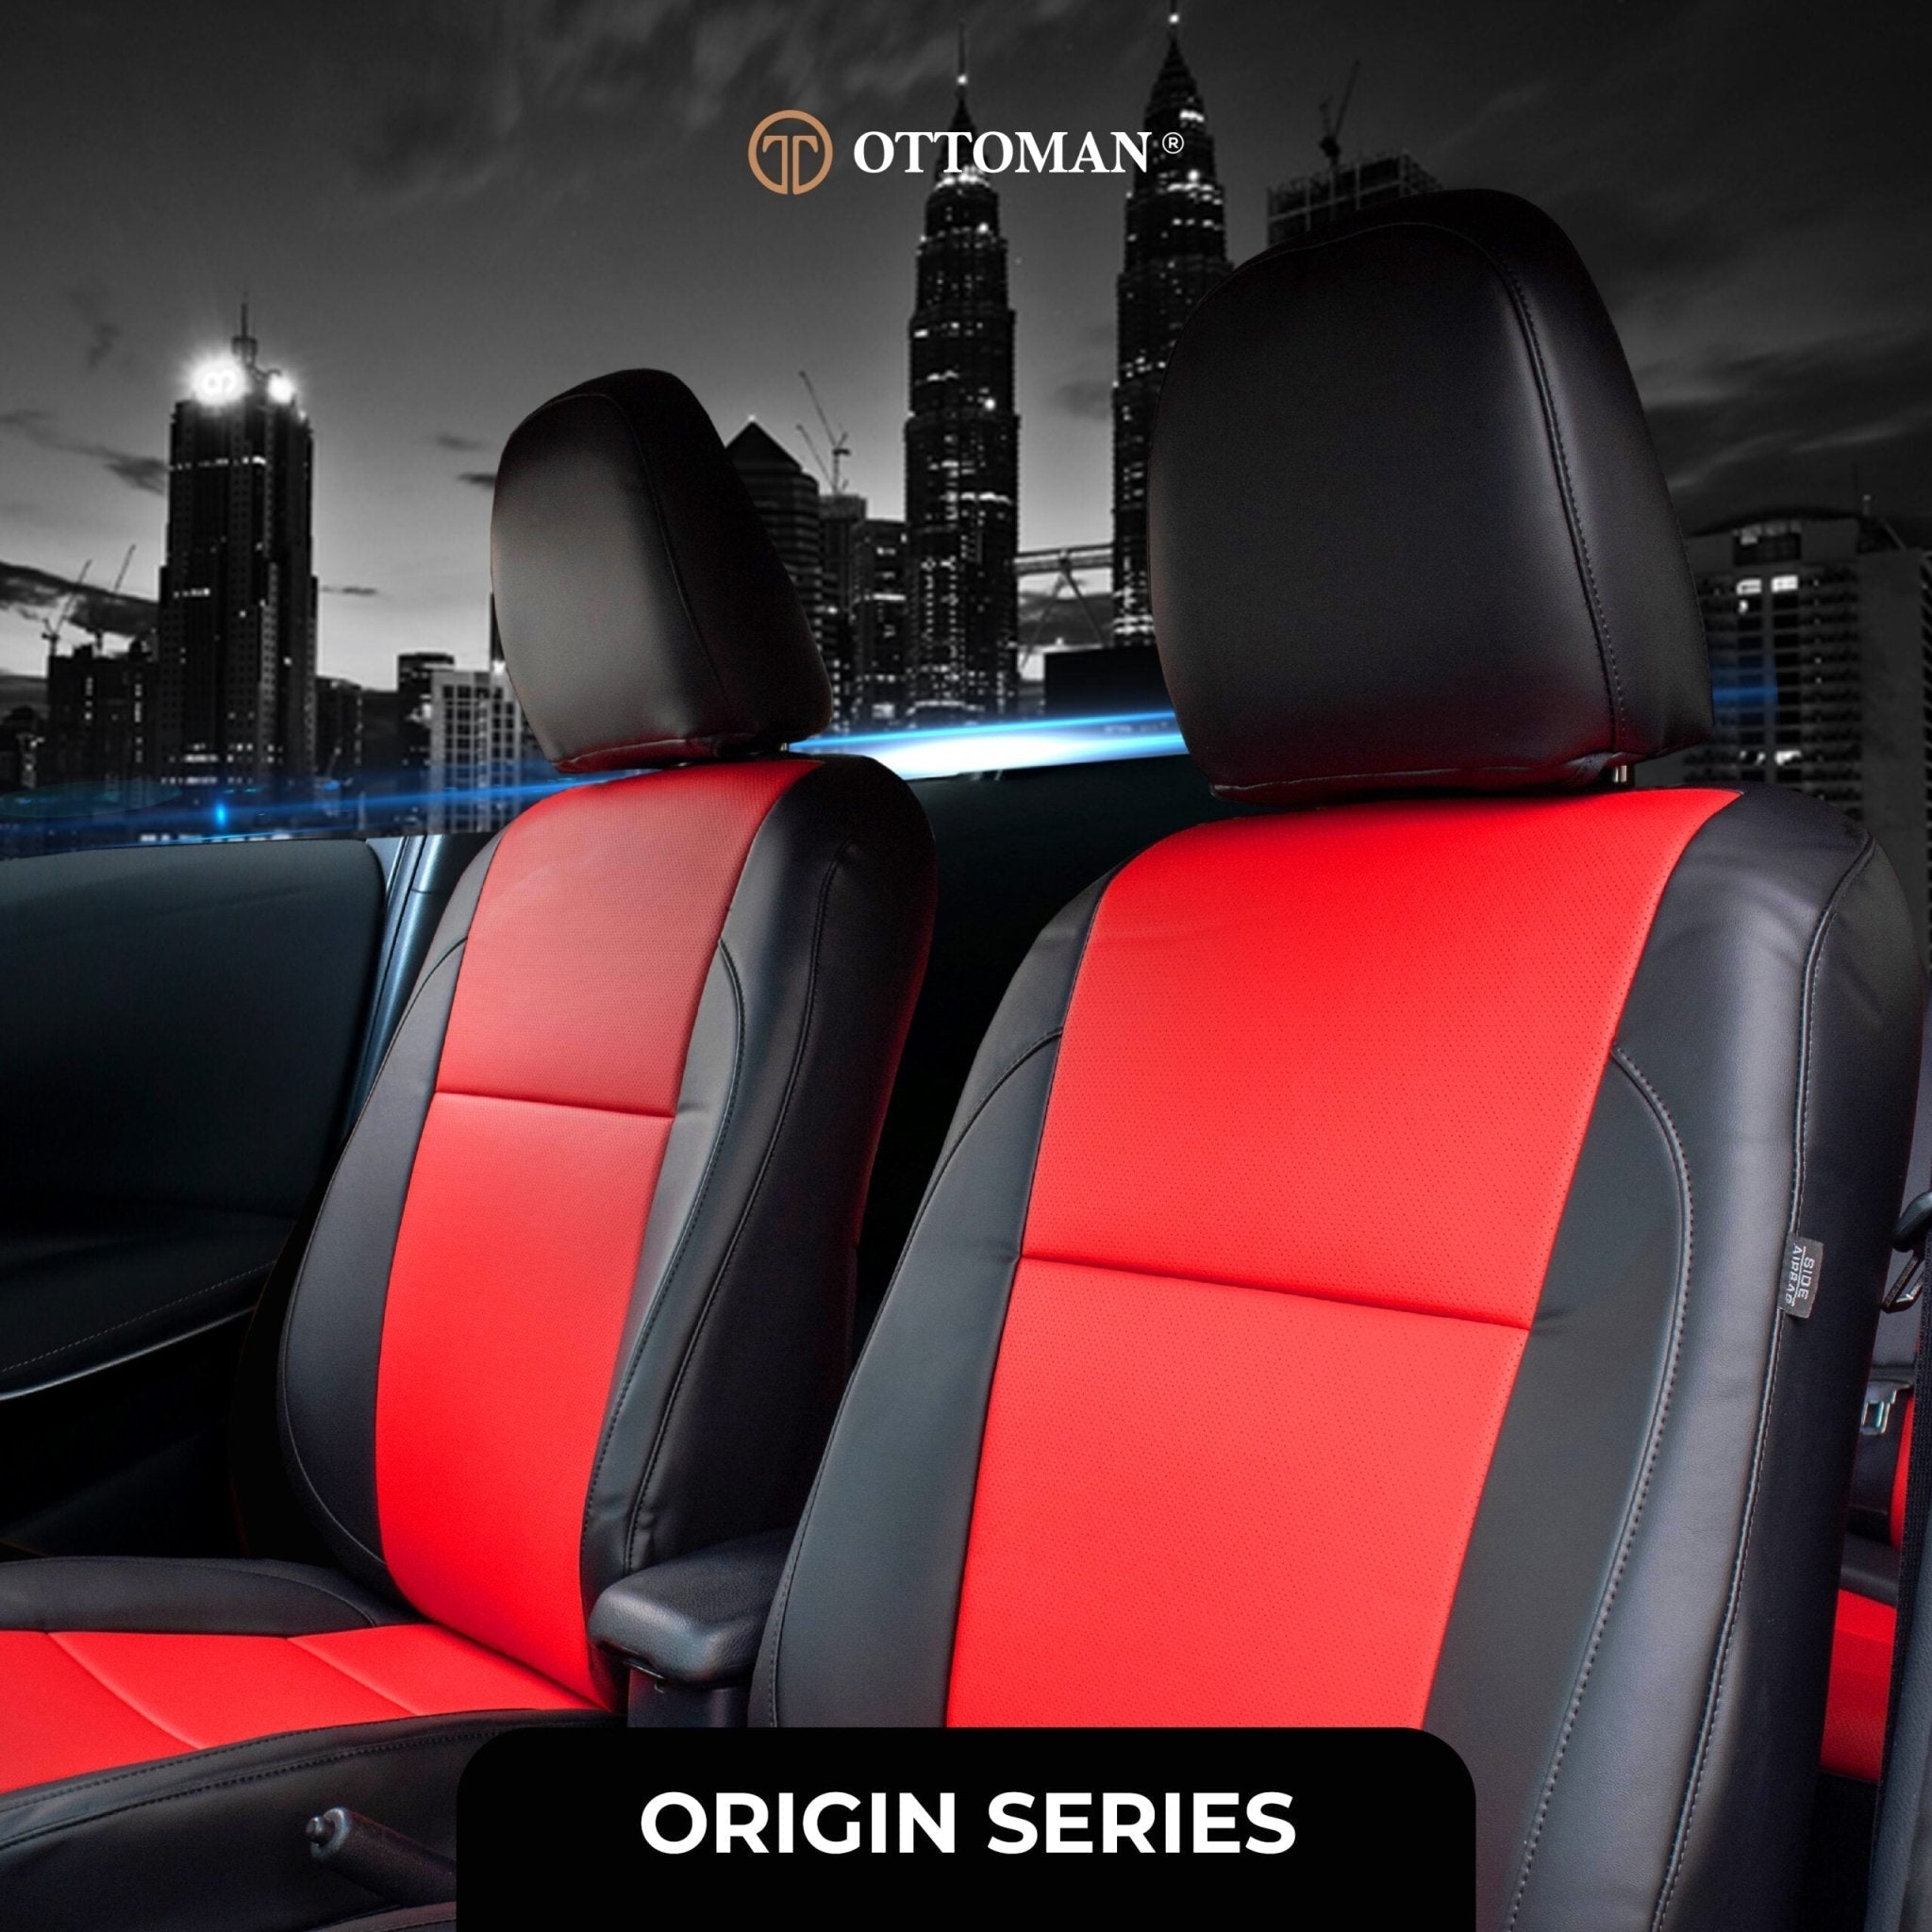 Toyota Prius C (2011-2019) Ottoman Seat Cover Seat Cover in Klang Selangor, Penang, Johor Bahru - Ottoman Car Mats